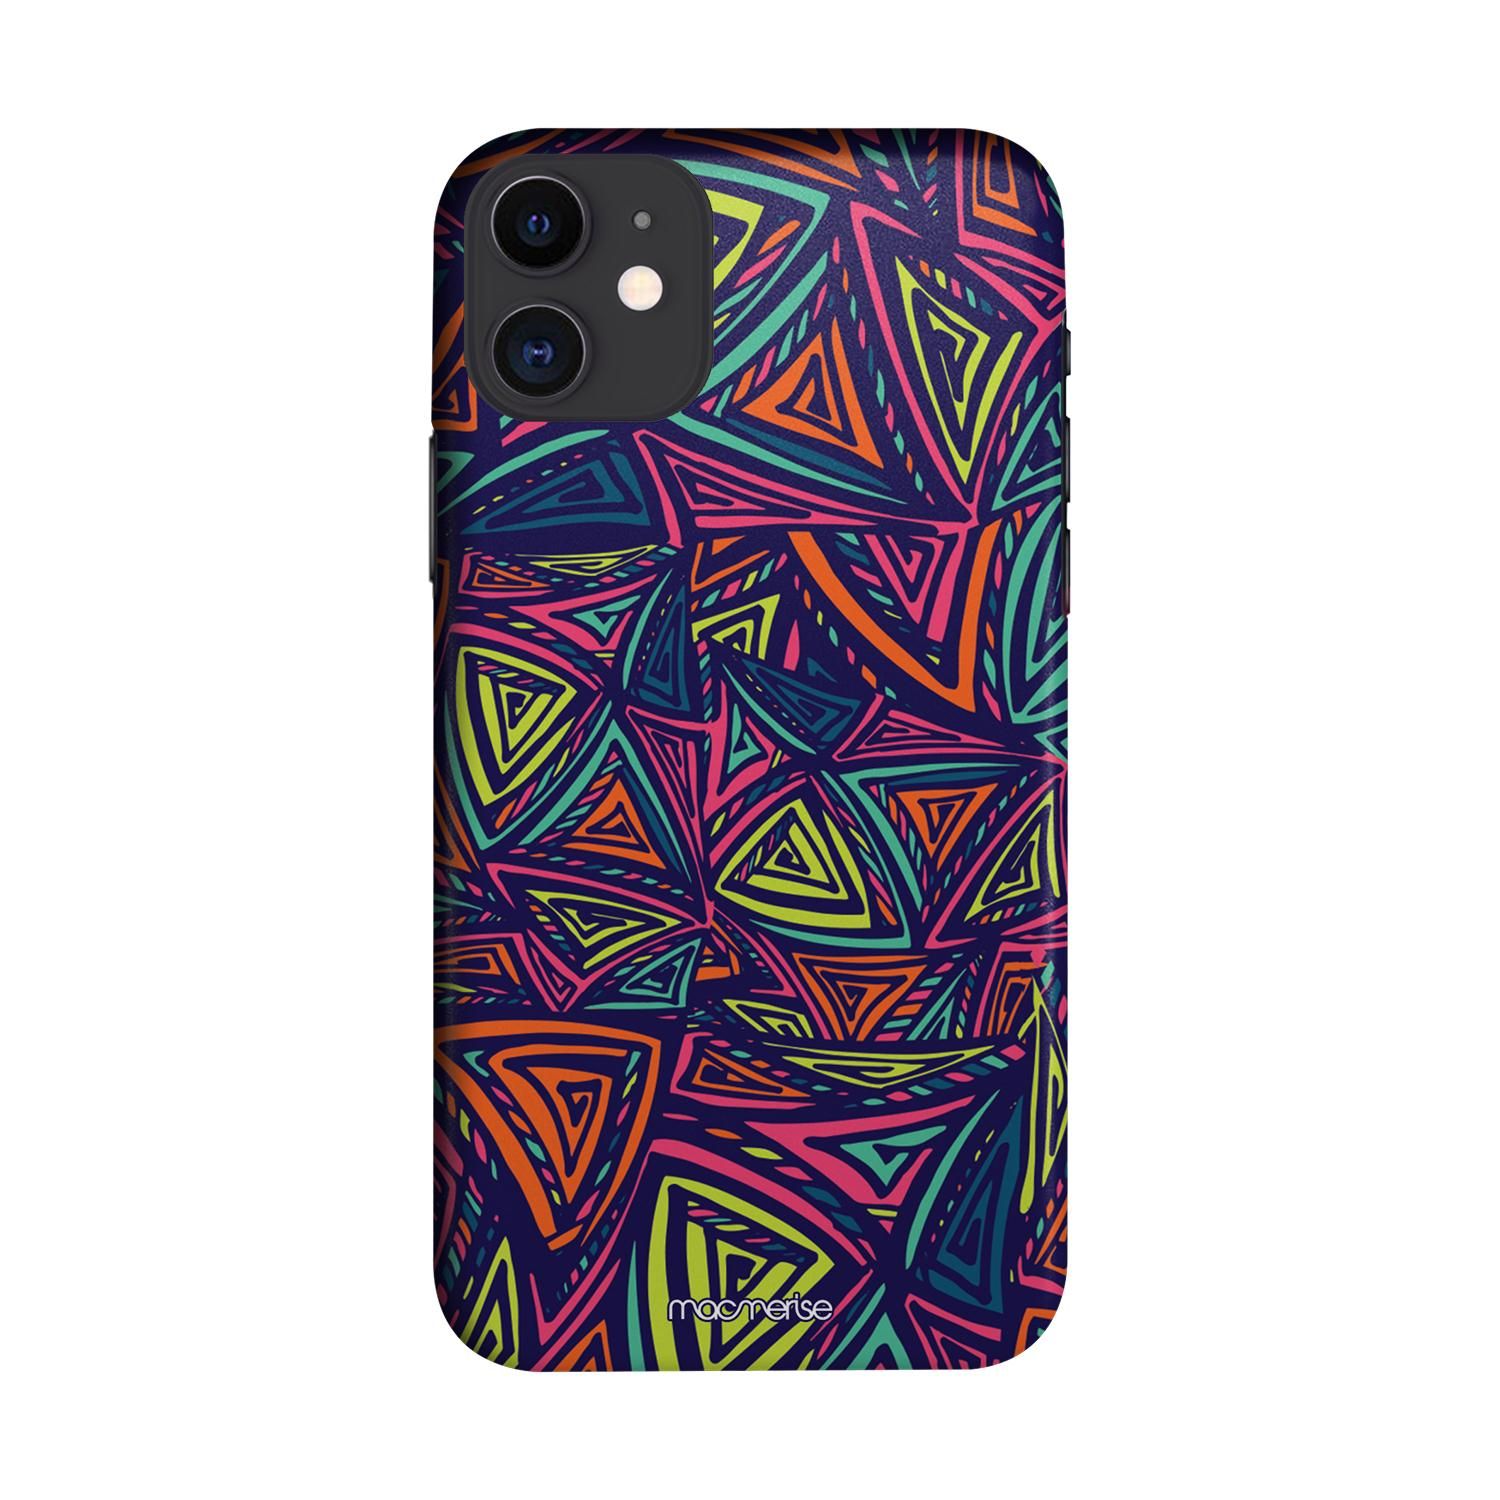 Buy Neon Angles - Sleek Phone Case for iPhone 11 Online